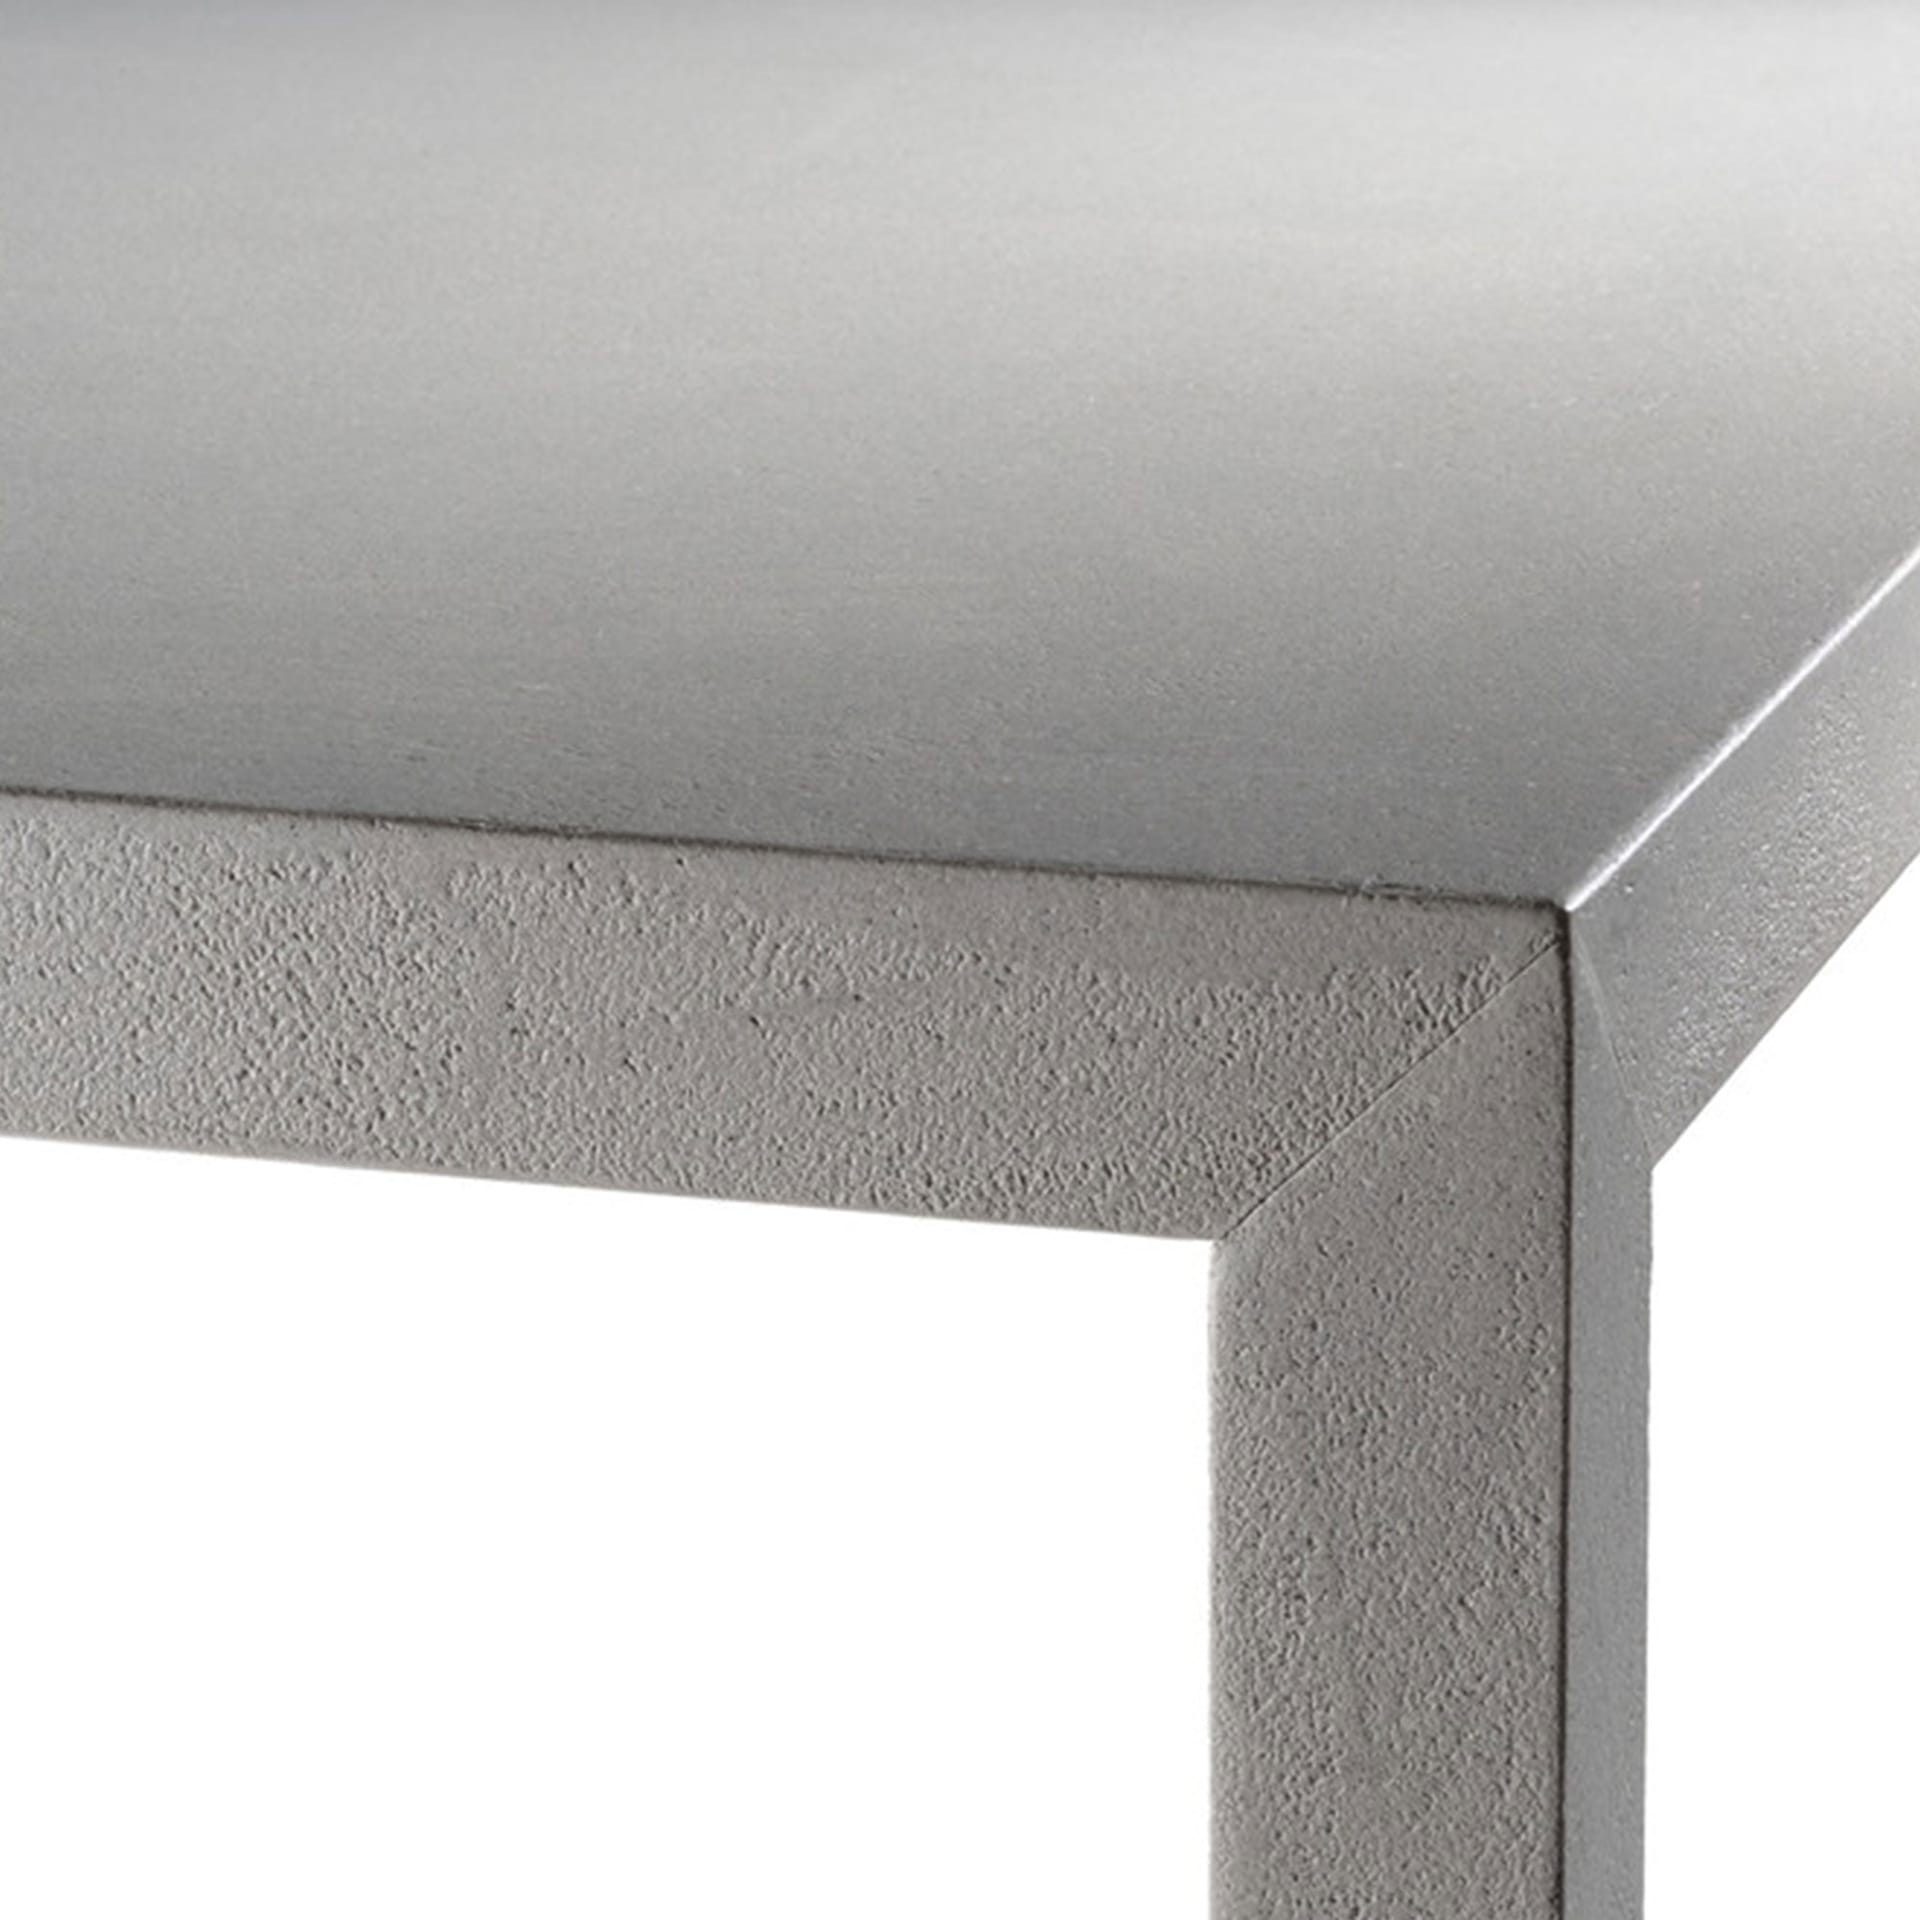 Tense Material Table, 90x220, Wood - MDF Italia - NO GA